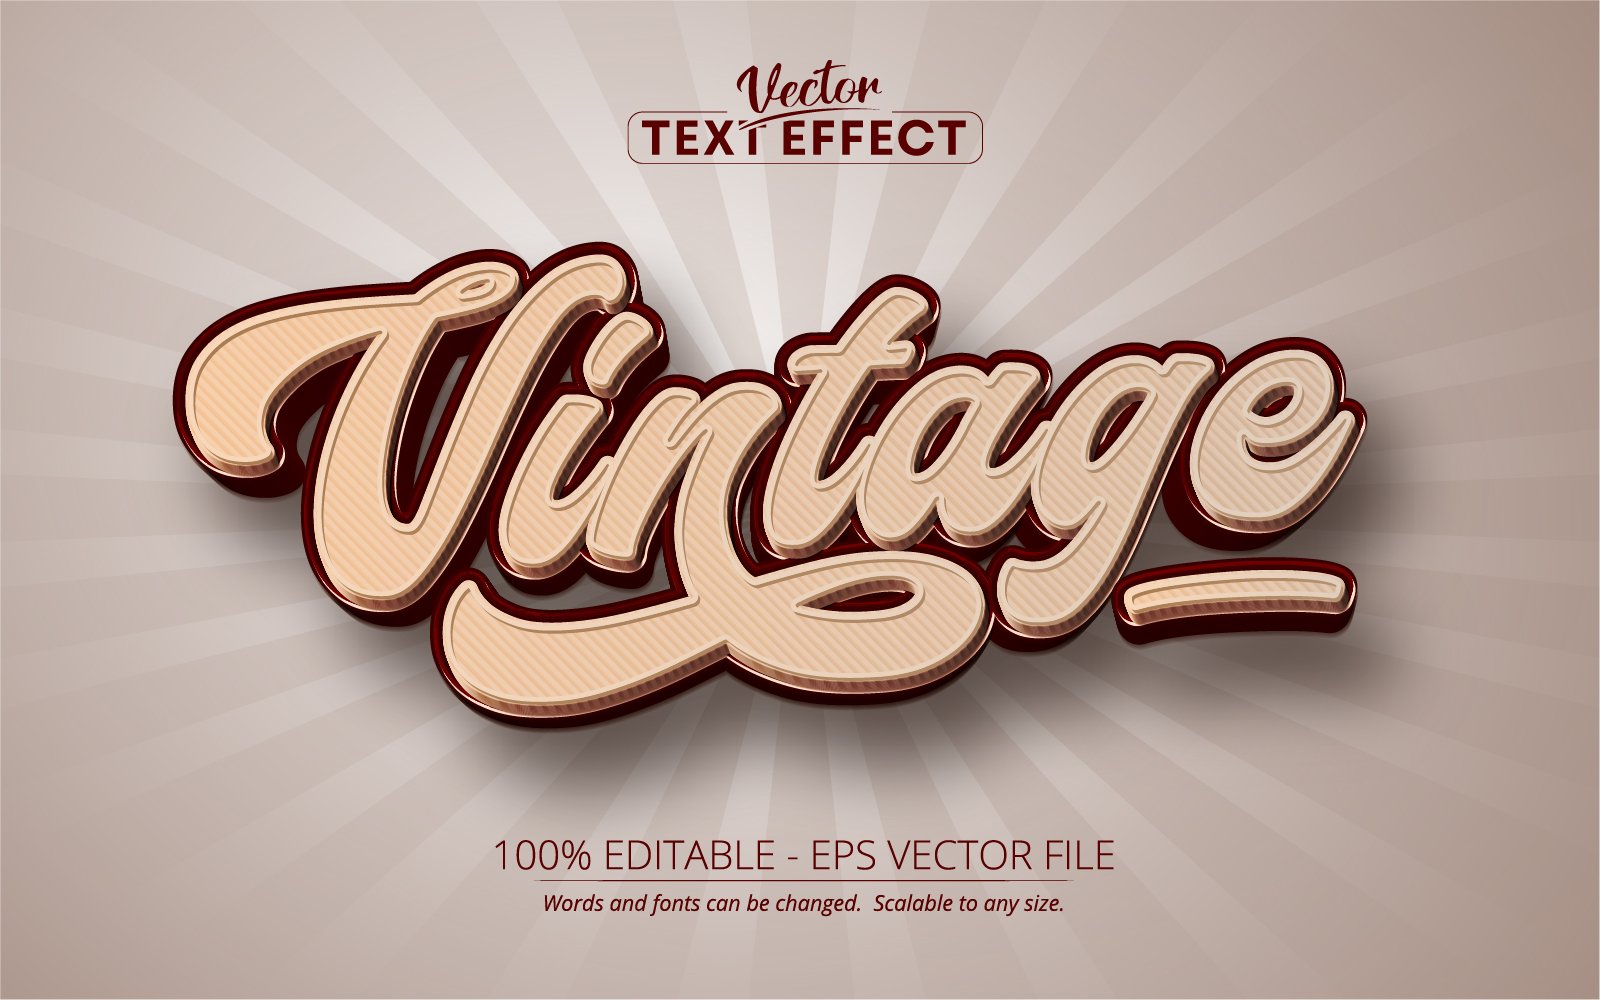 Kit Graphique #272680 Type Editable Web Design - Logo template Preview